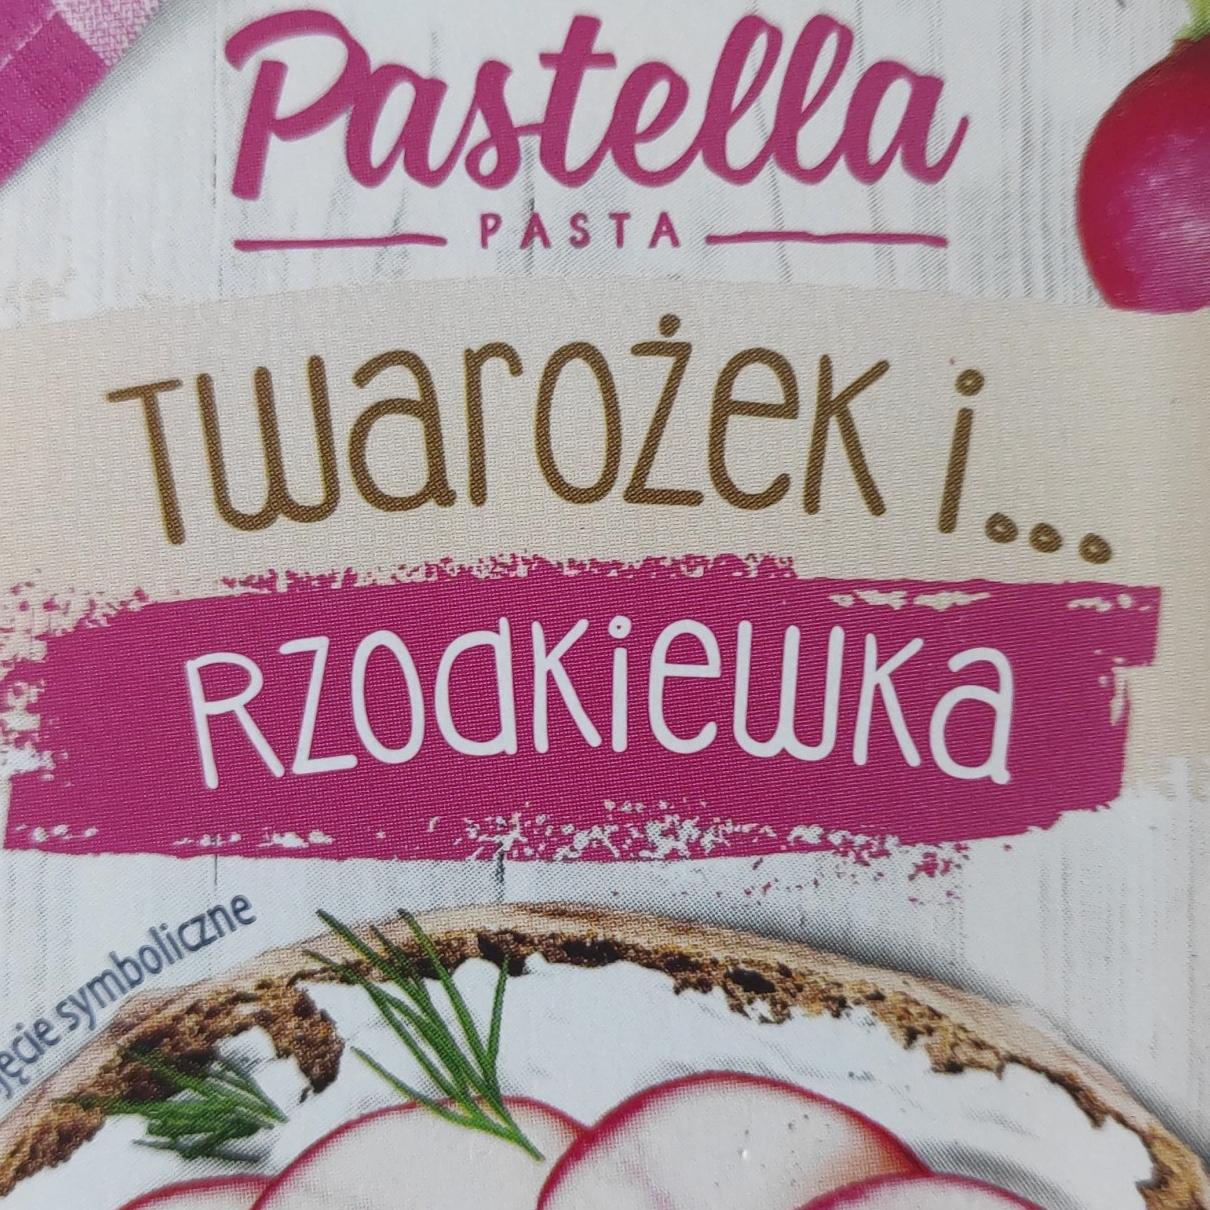 Fotografie - Twarozek i rzodkiewka Pastella Pasta